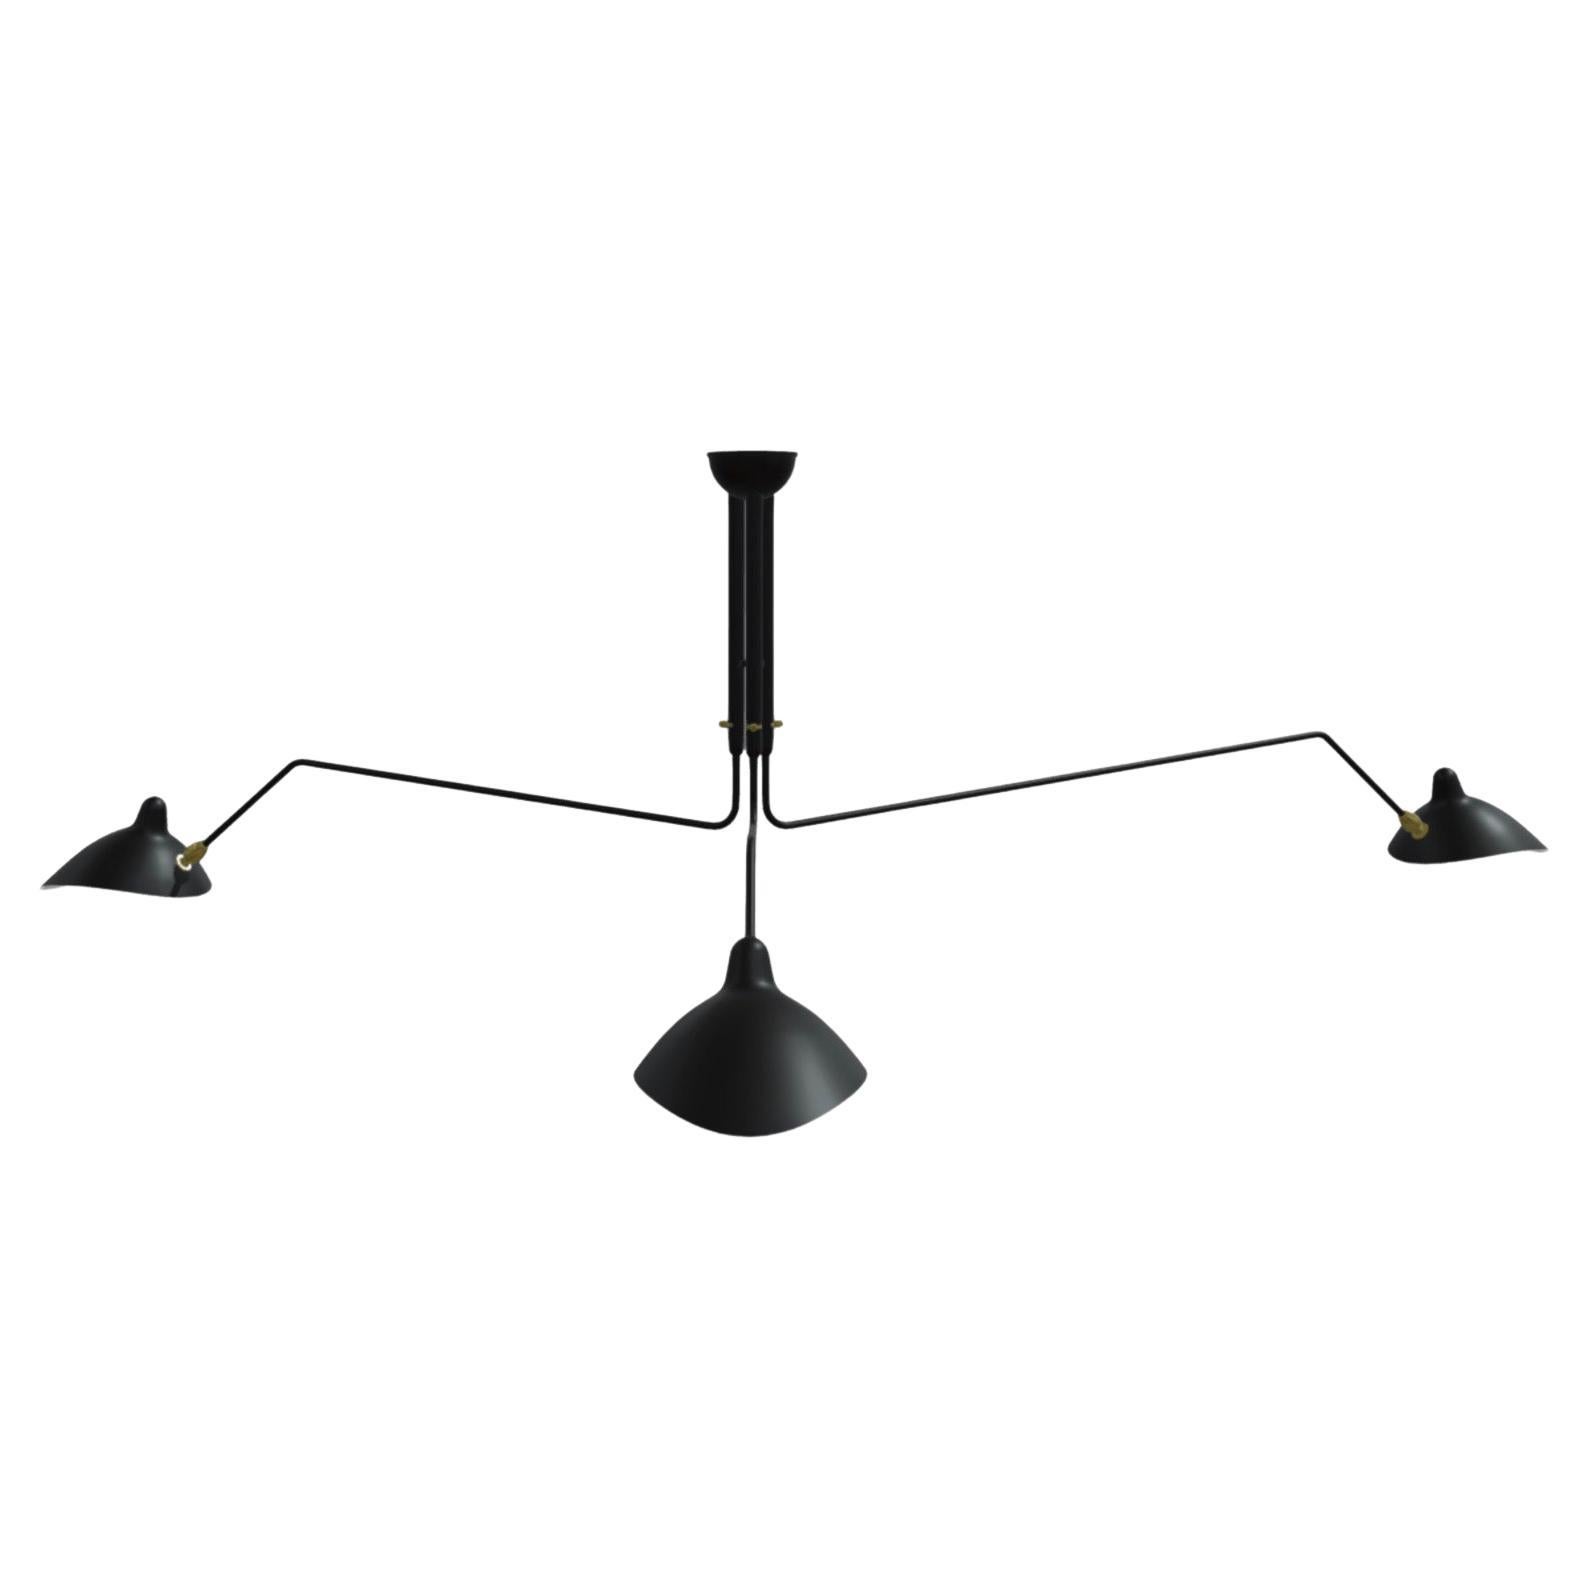 Serge Mouille 'Plafonnier 3 Bras Pivotants' Ceiling Lamp in Black For Sale